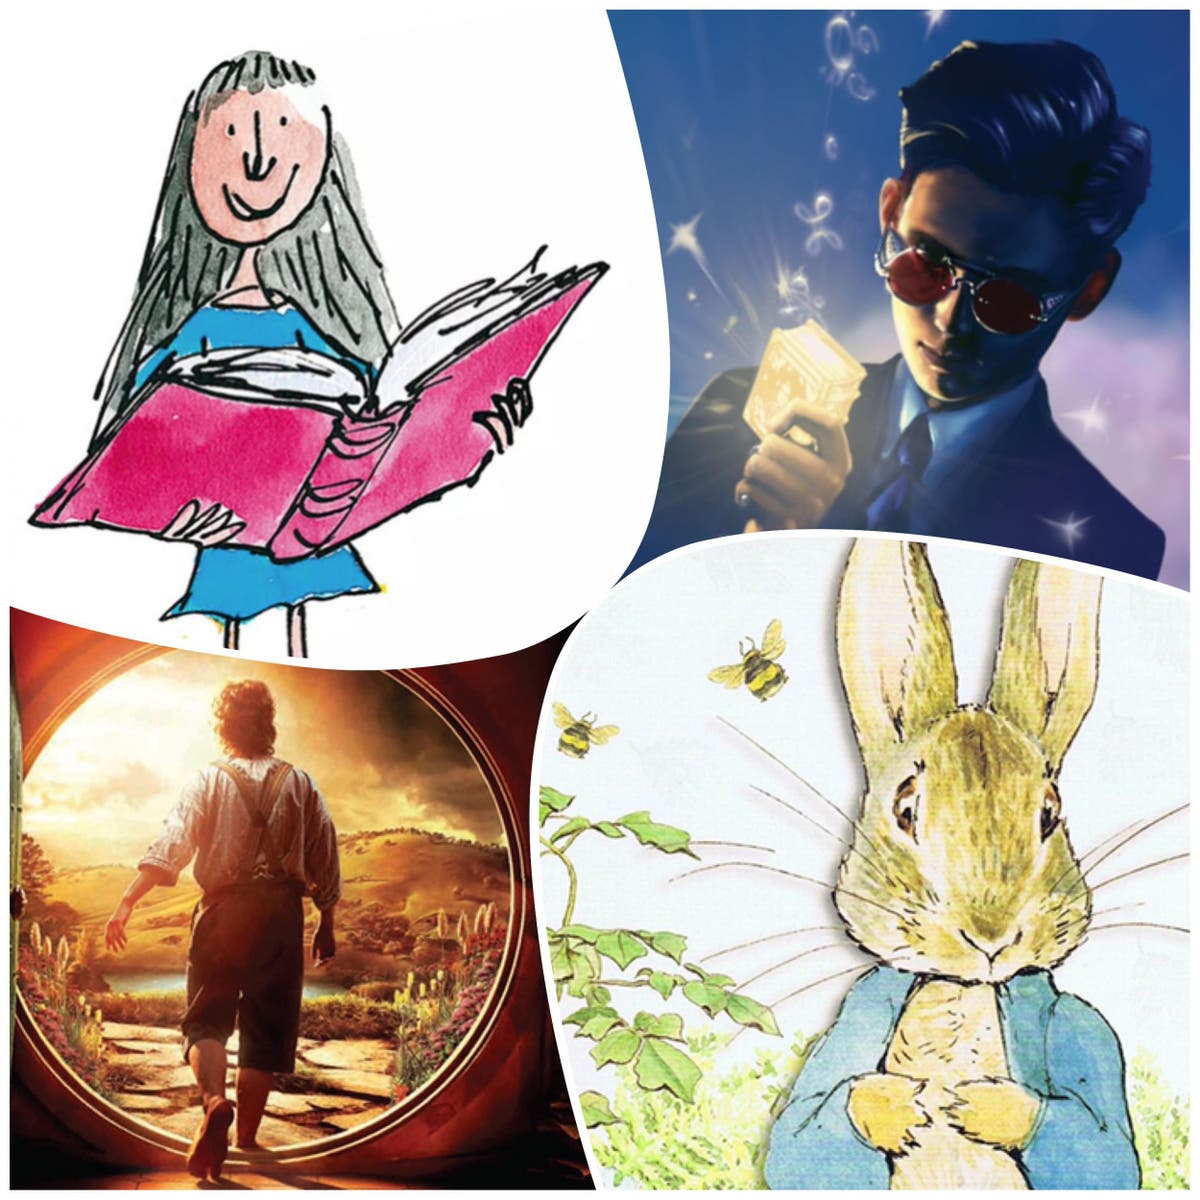 30 best children’s books: From Matilda to The Jungle Book